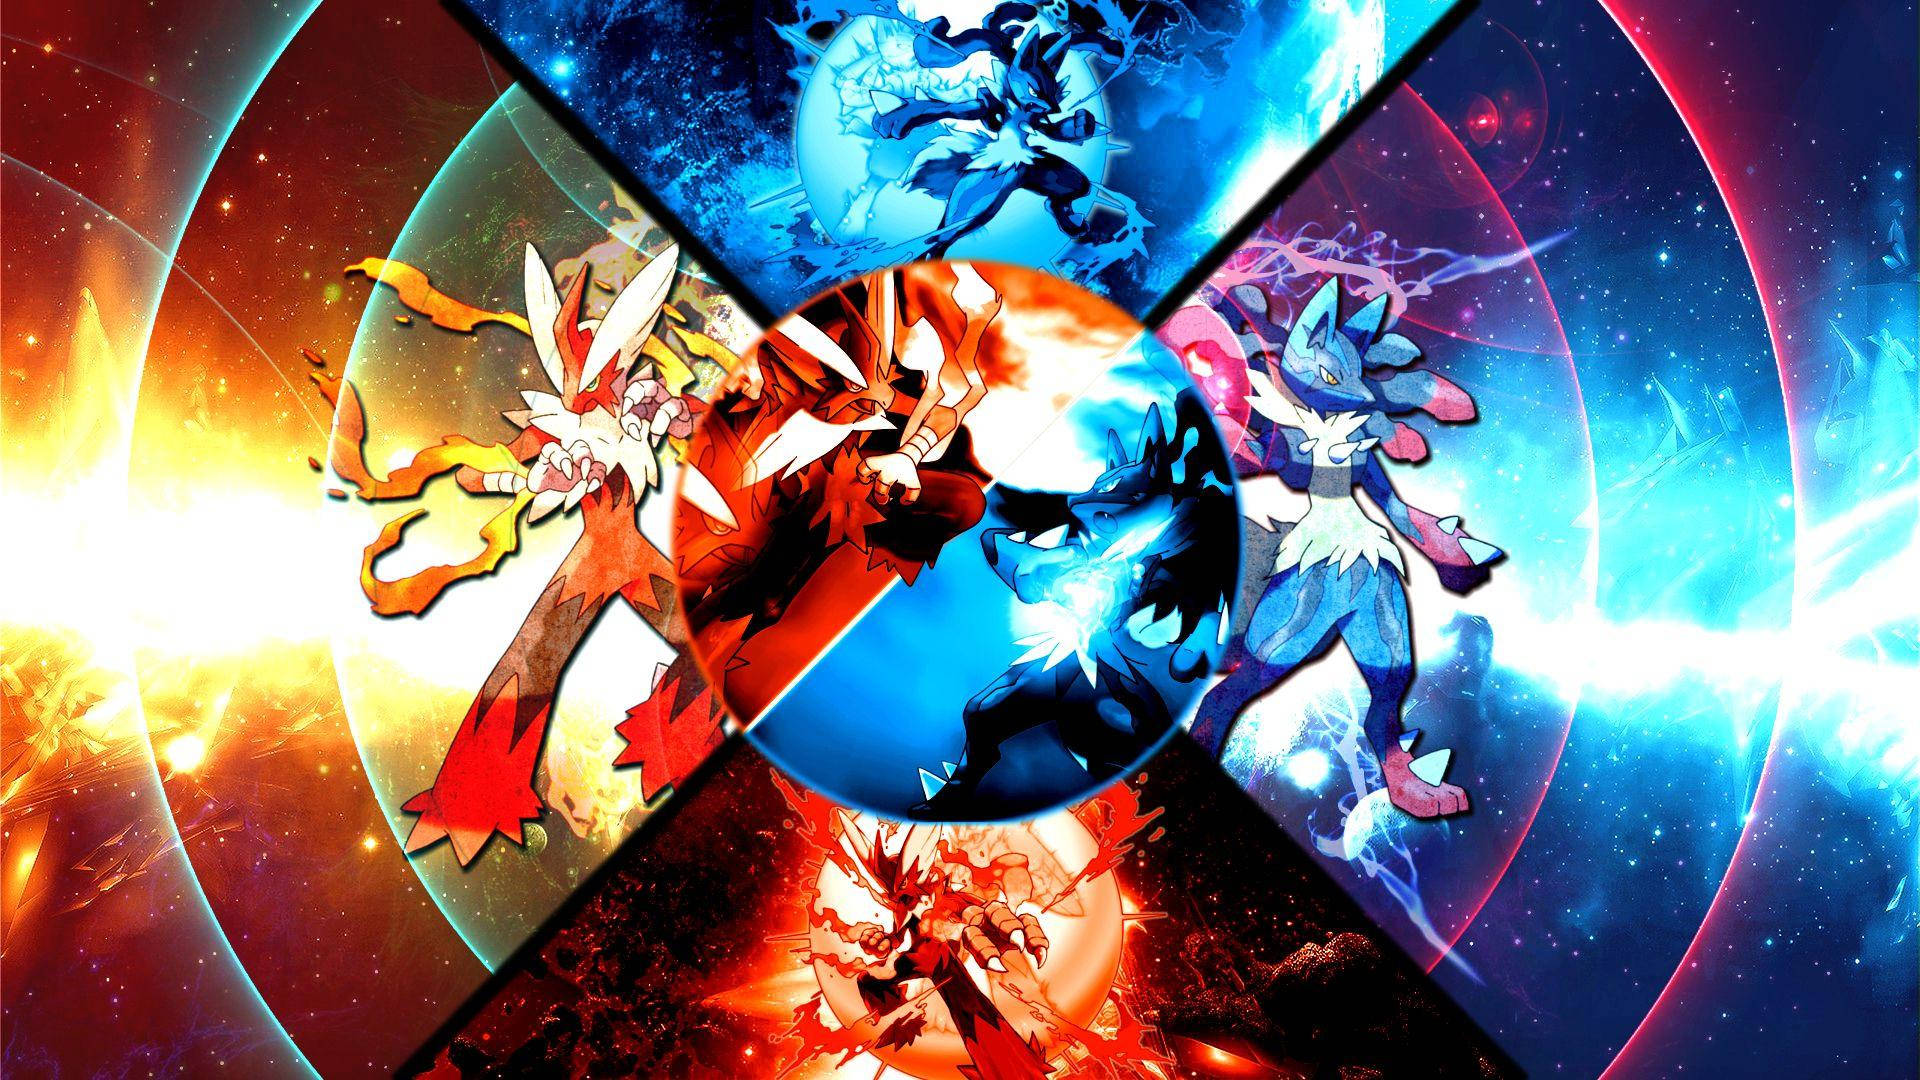 Jynx Evolution Pokémon Omega Ruby And Alpha Sapphire Blaziken